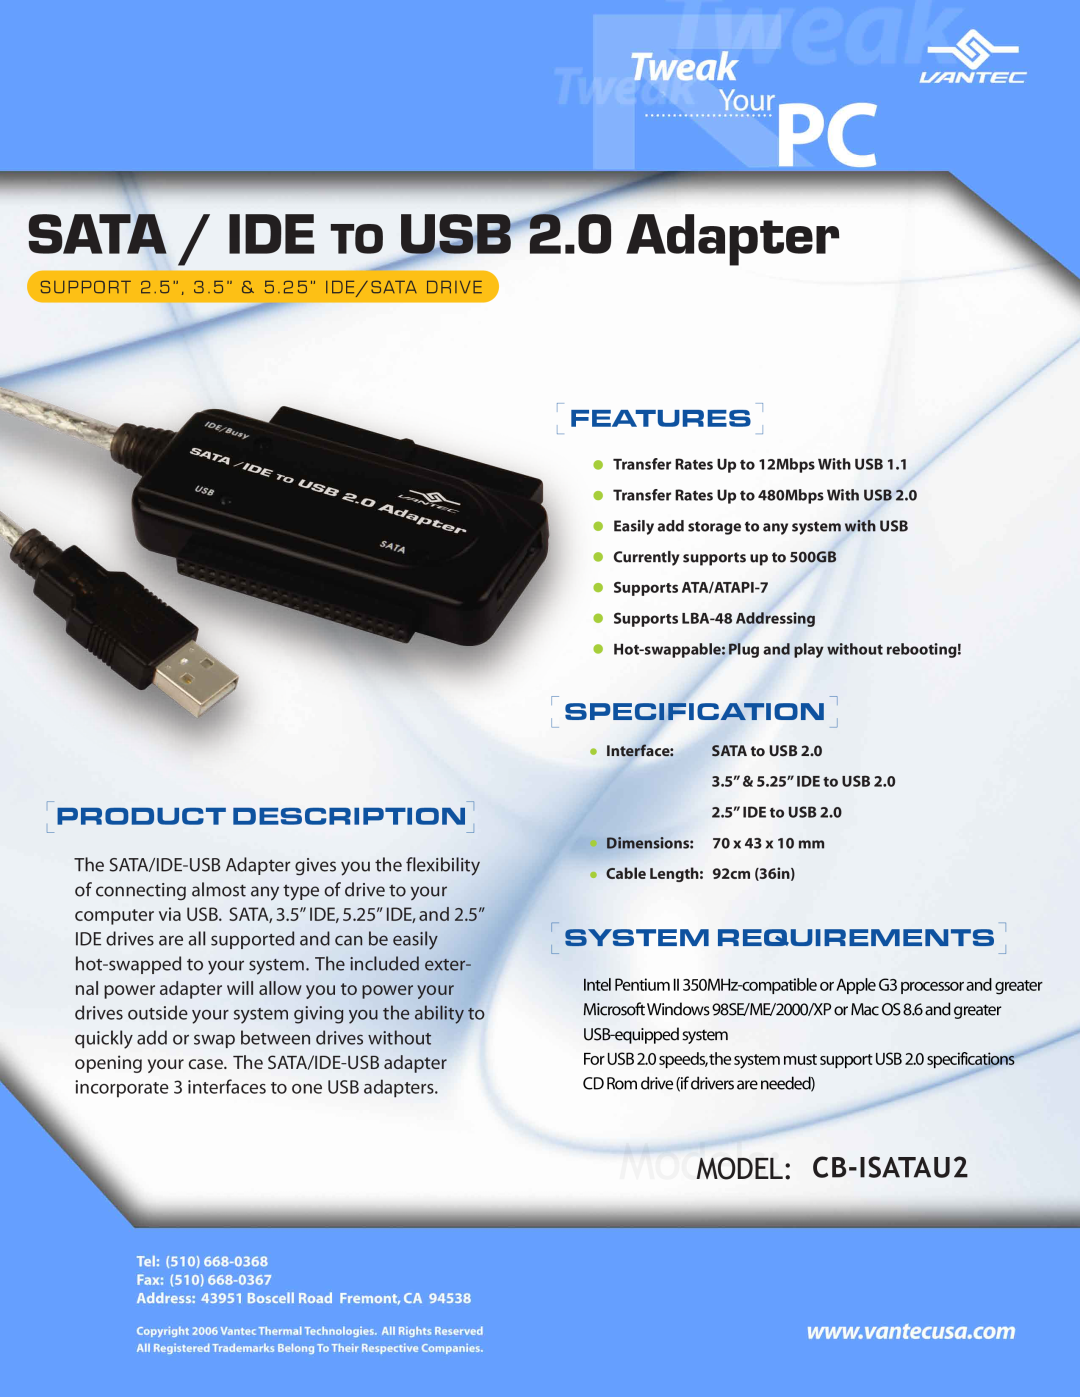 Vantec dimensions SATA / IDE TO USB 2.0 Adapter, MODEL CB-ISATAU2, Features, Product Description, Specification 